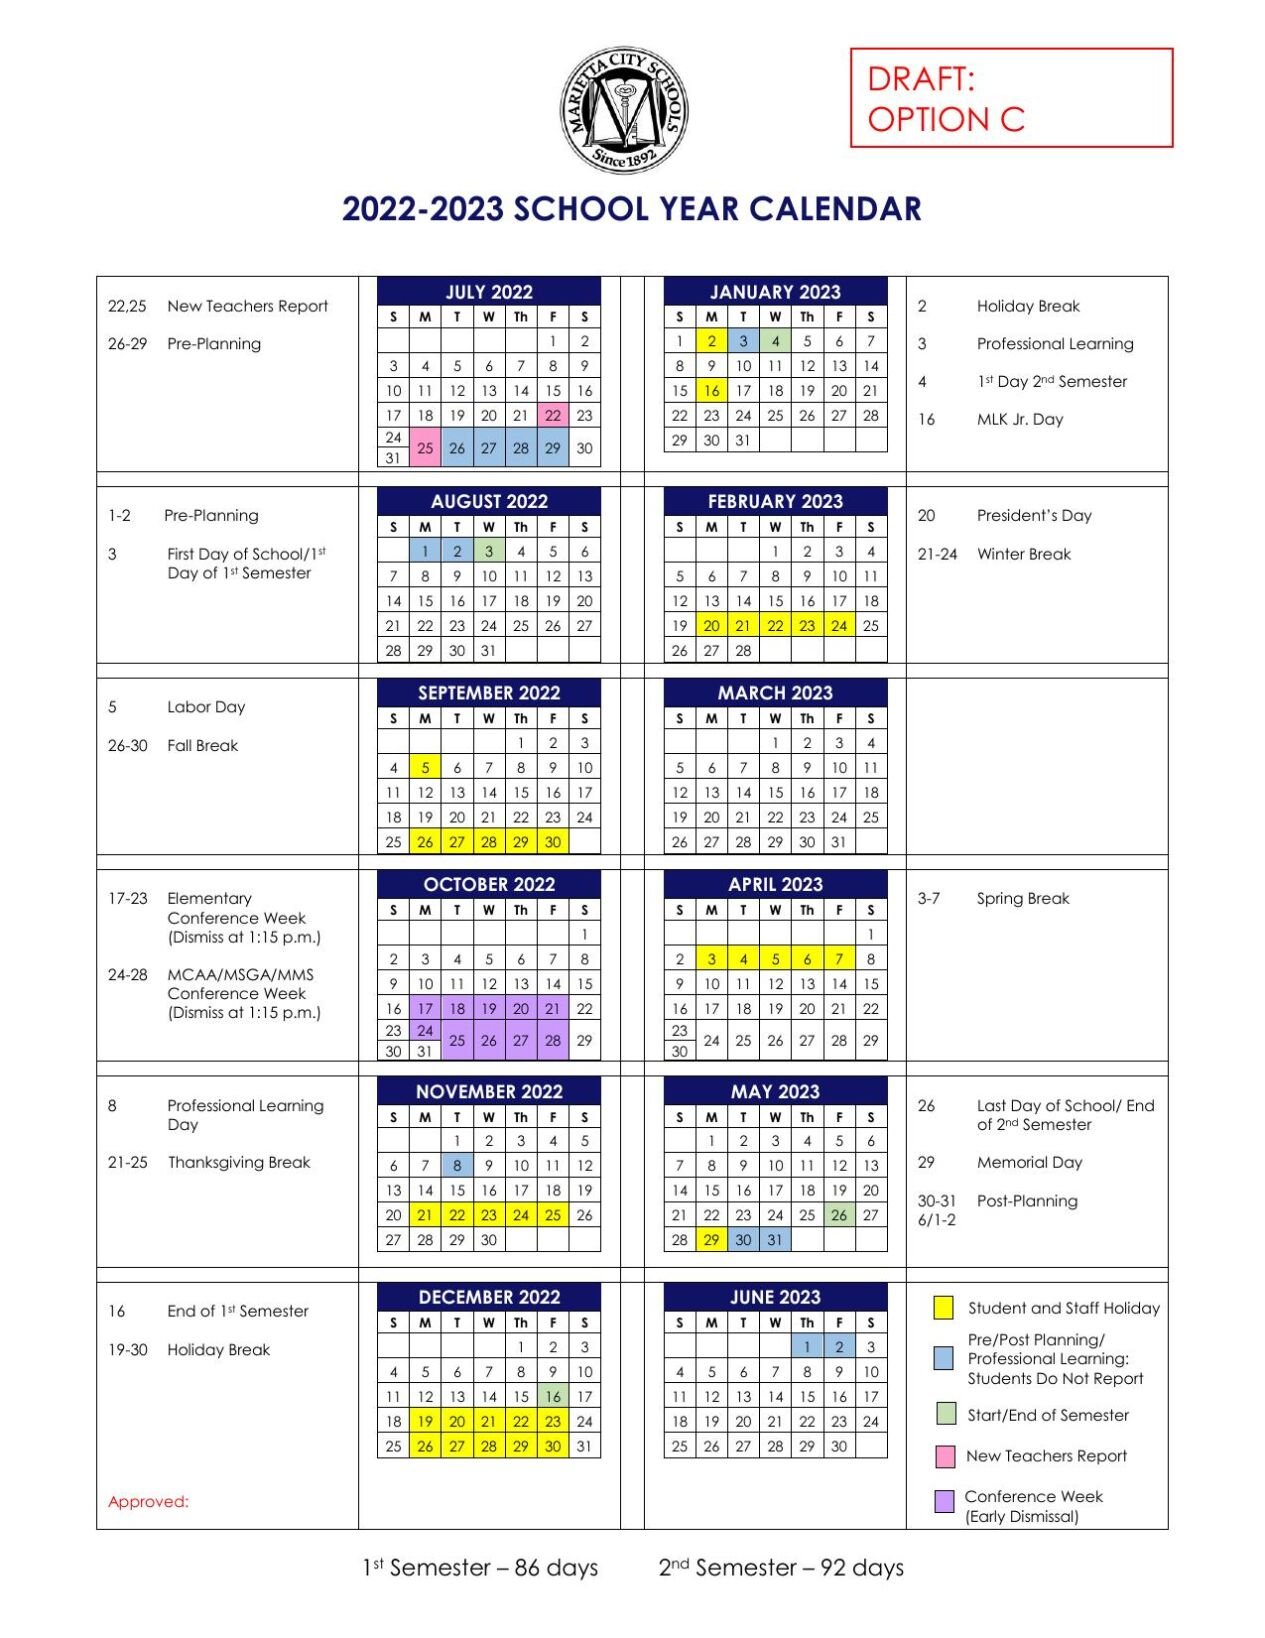 Ohio University Academic Calendar 2022 2023 2022-23 Marietta Schools Calendar Option C | | Mdjonline.com